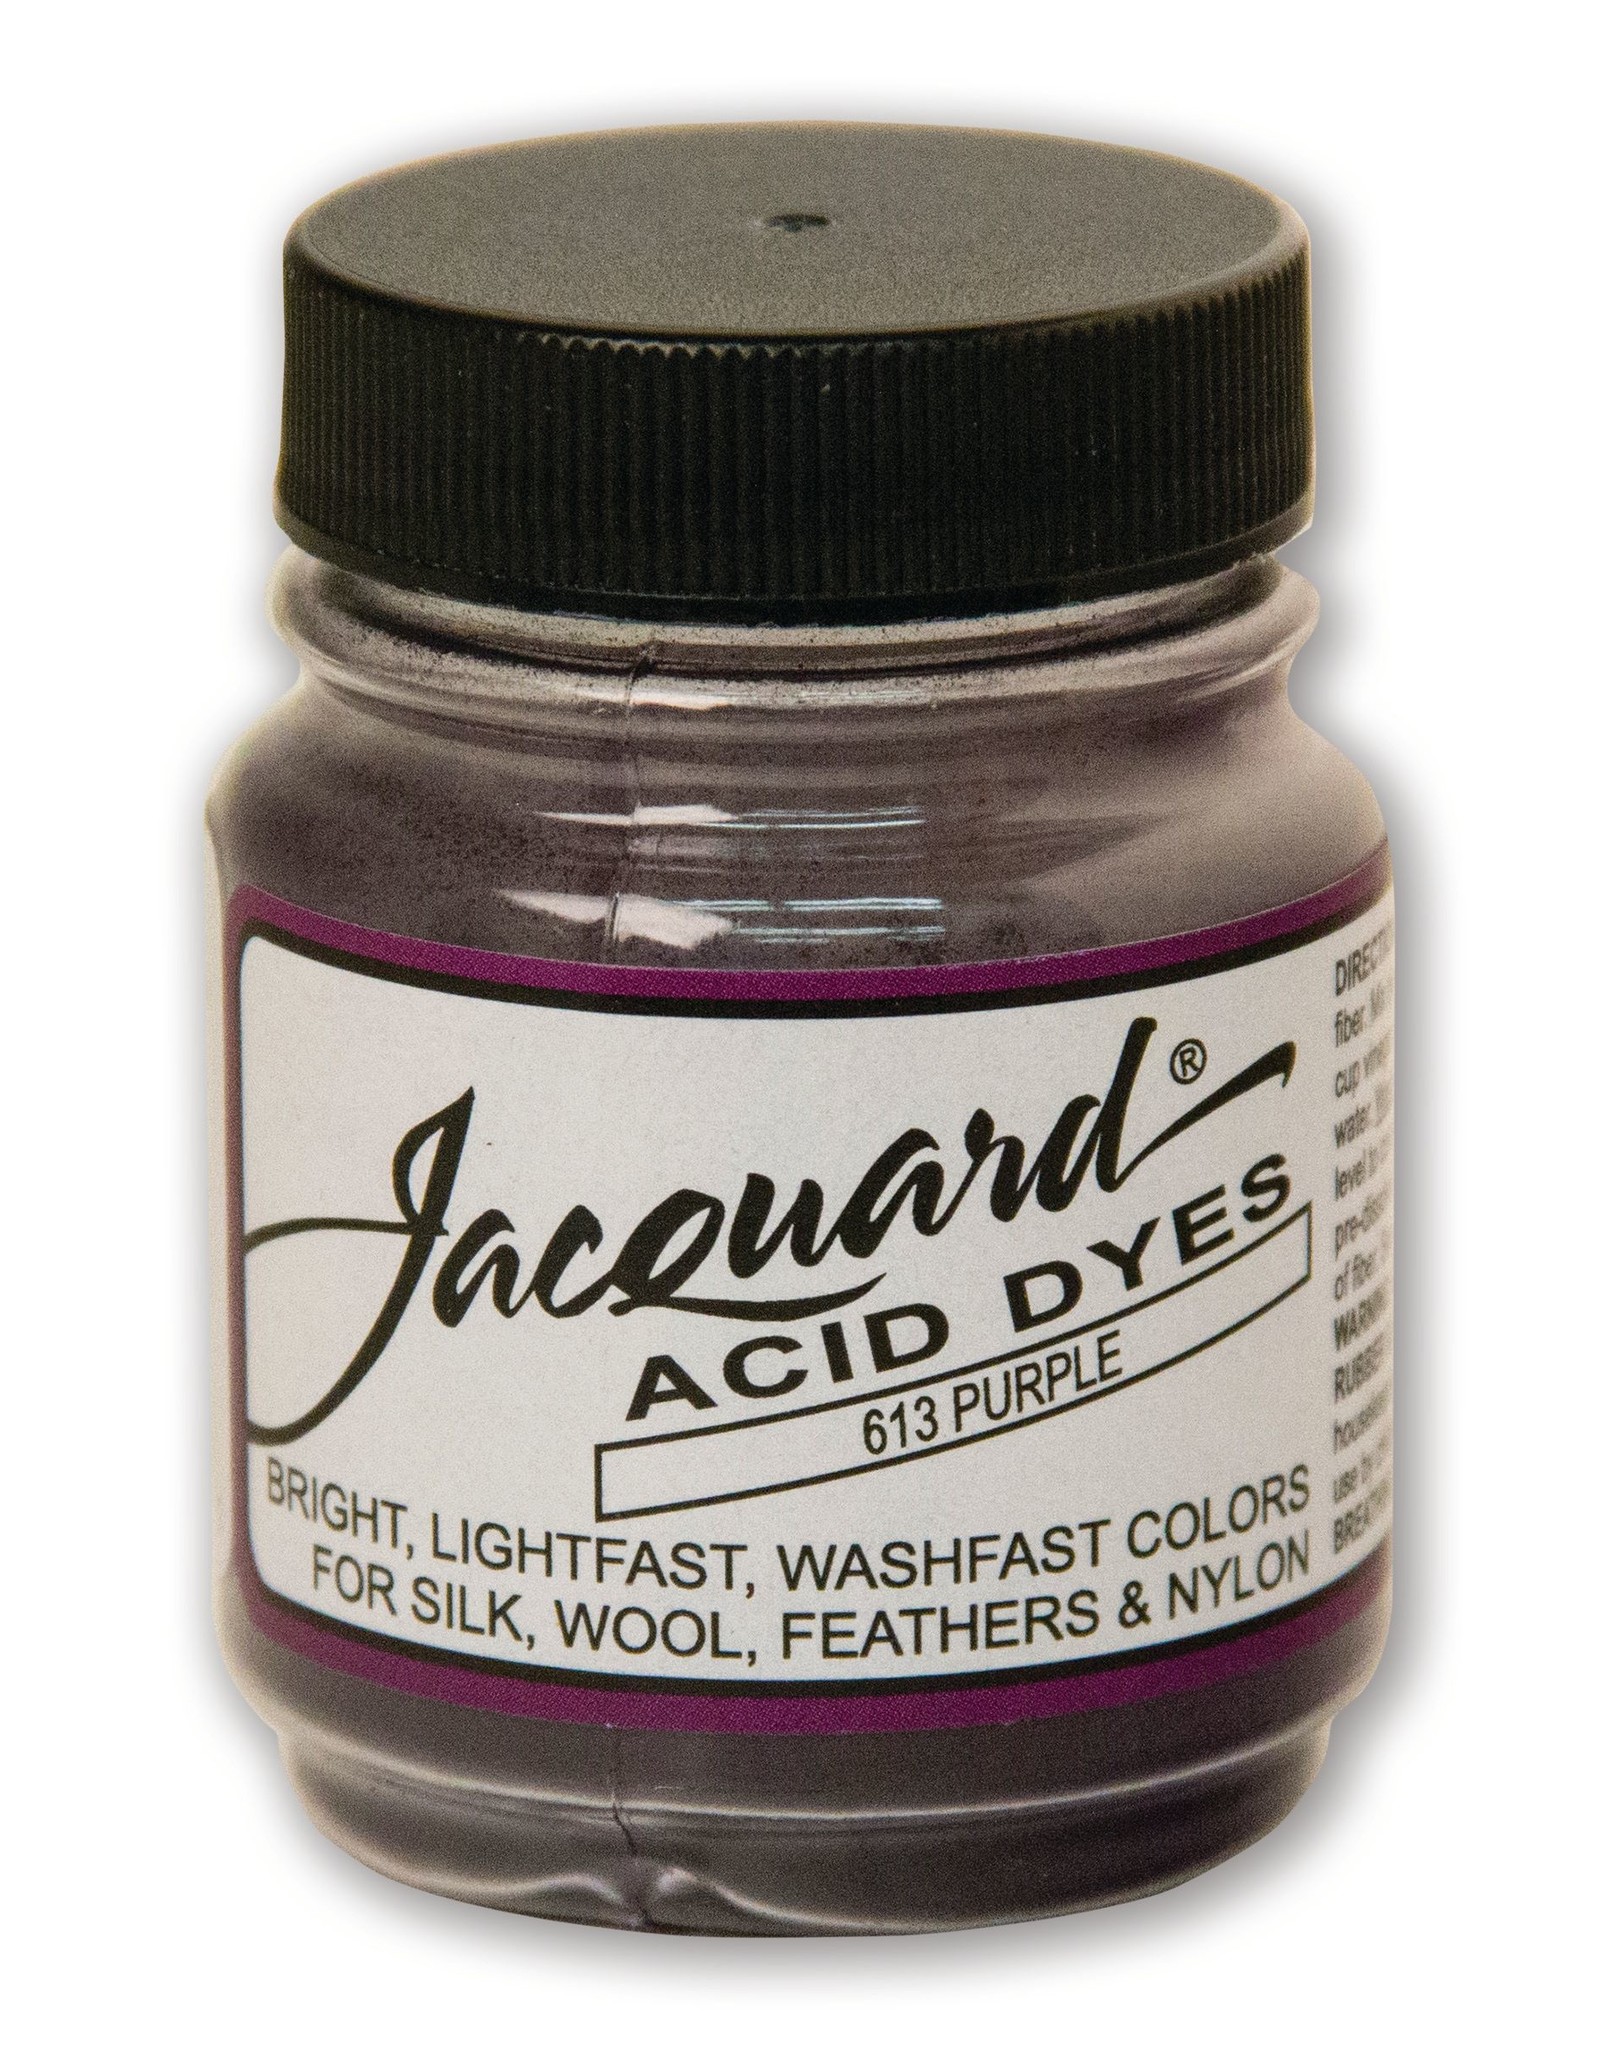 Jacquard Jacquard Acid Dye, #613 Purple ½oz